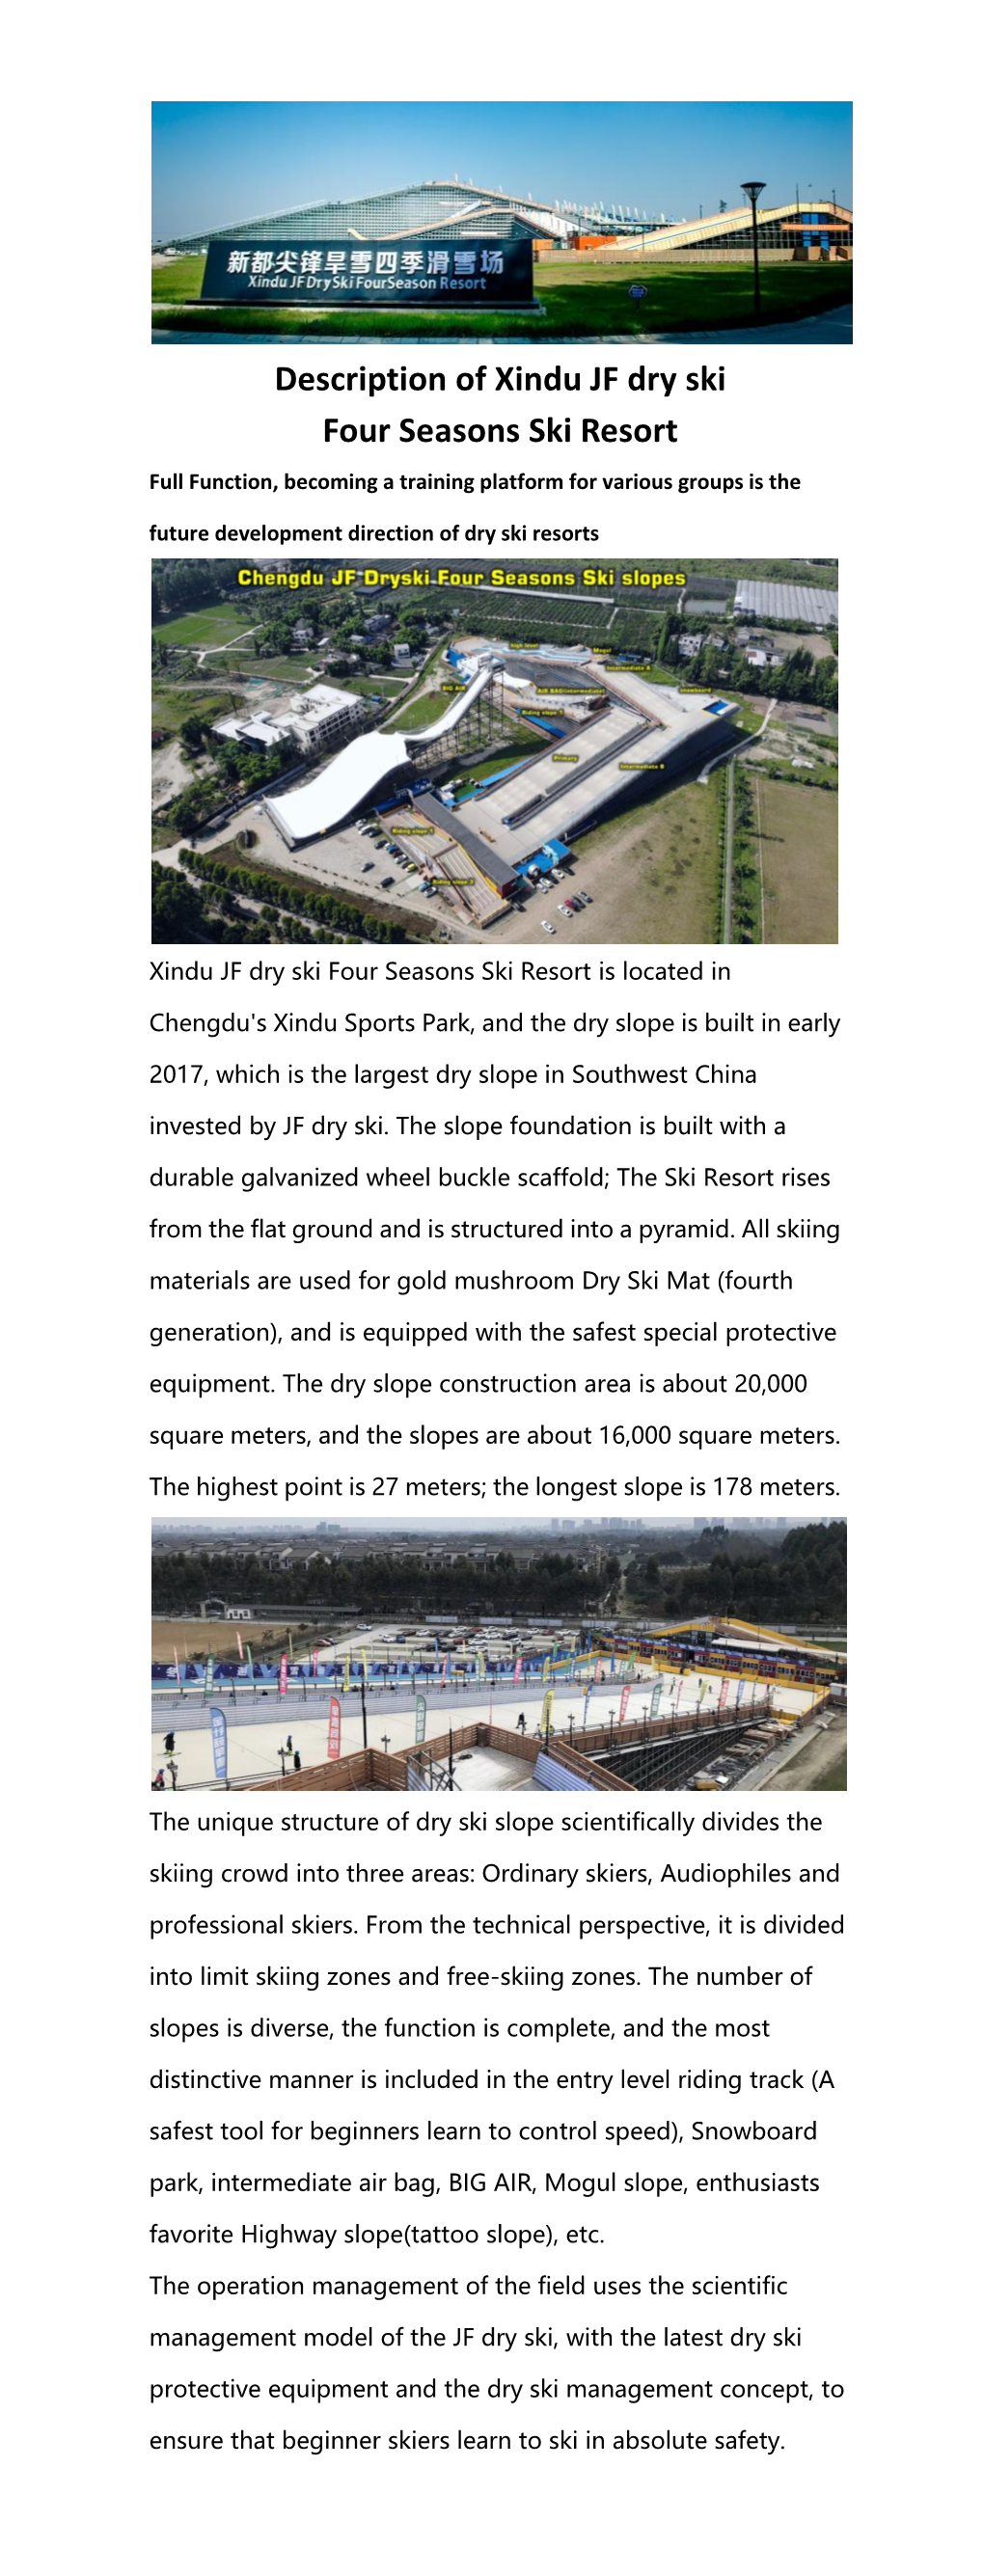 Description of Xindu JF Dry Ski Four Seasons Ski Resort